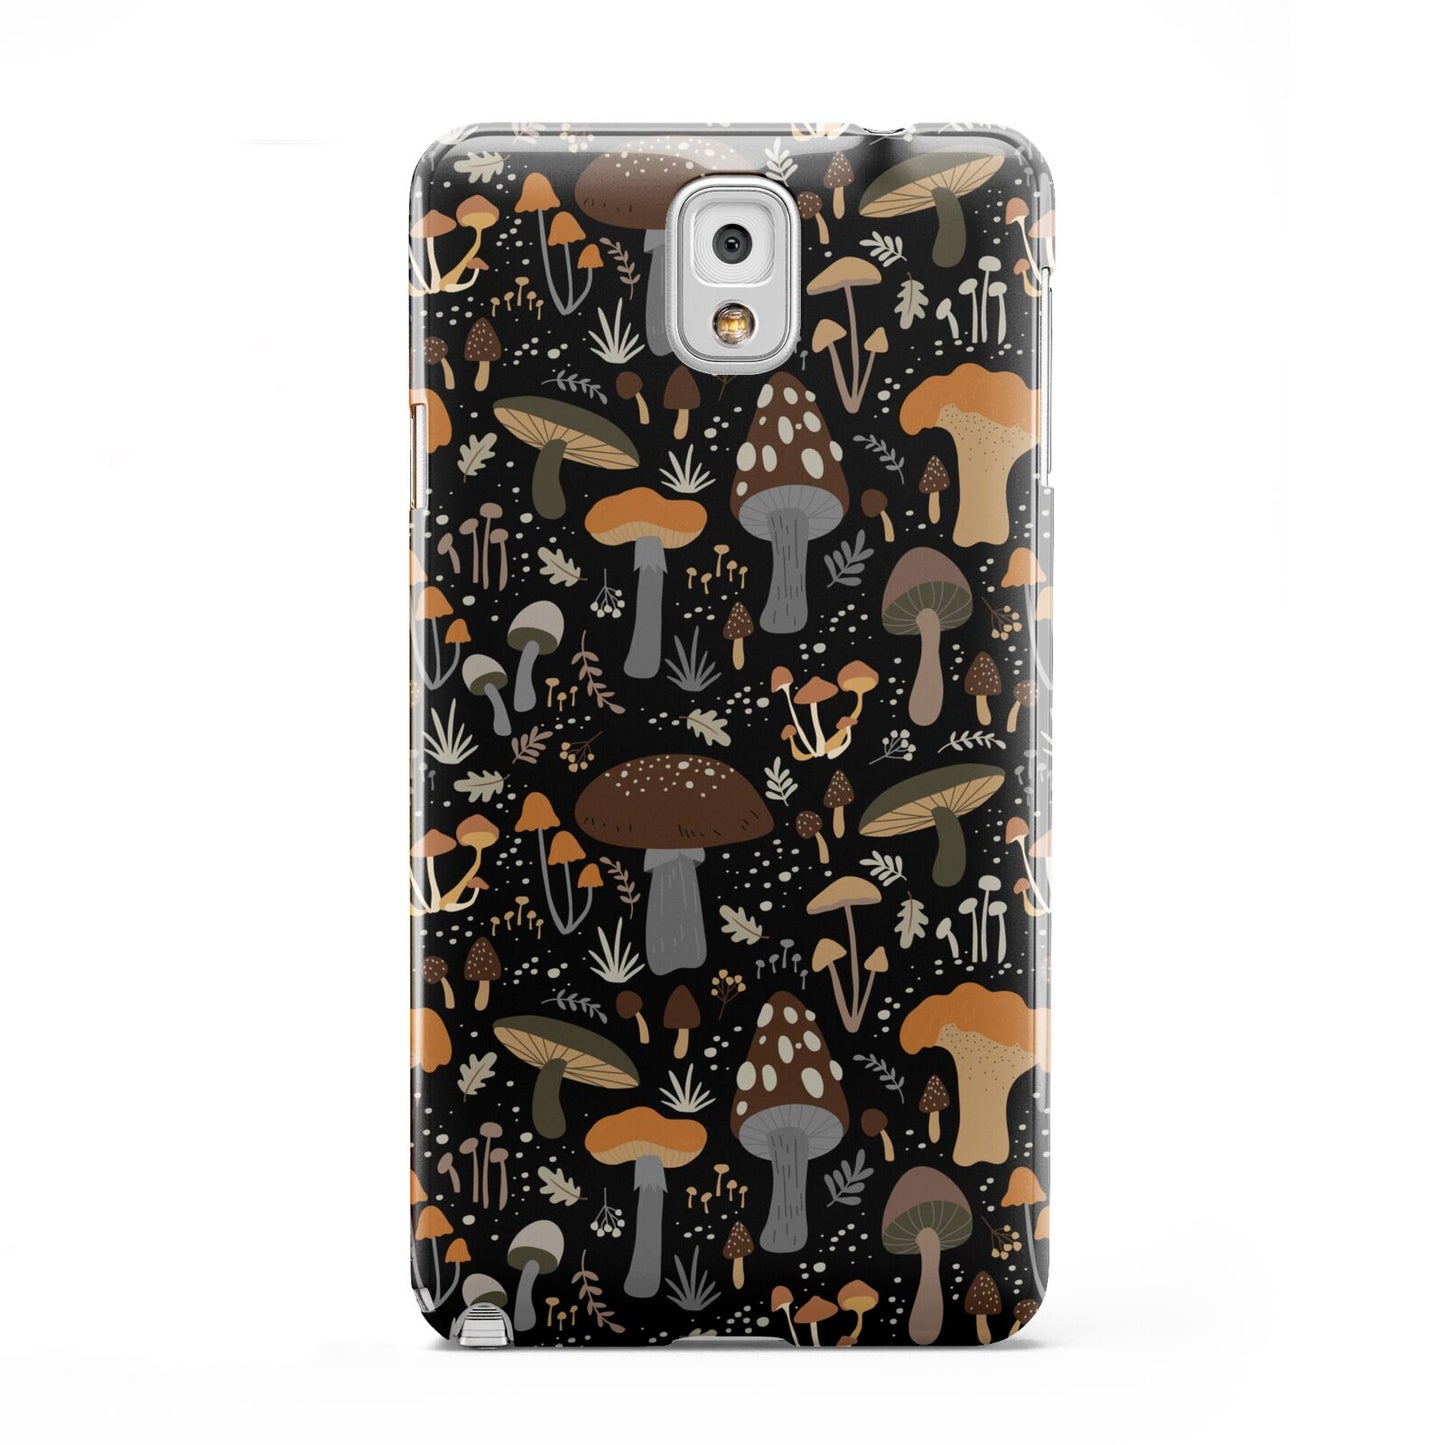 Mushroom Samsung Galaxy Note 3 Case